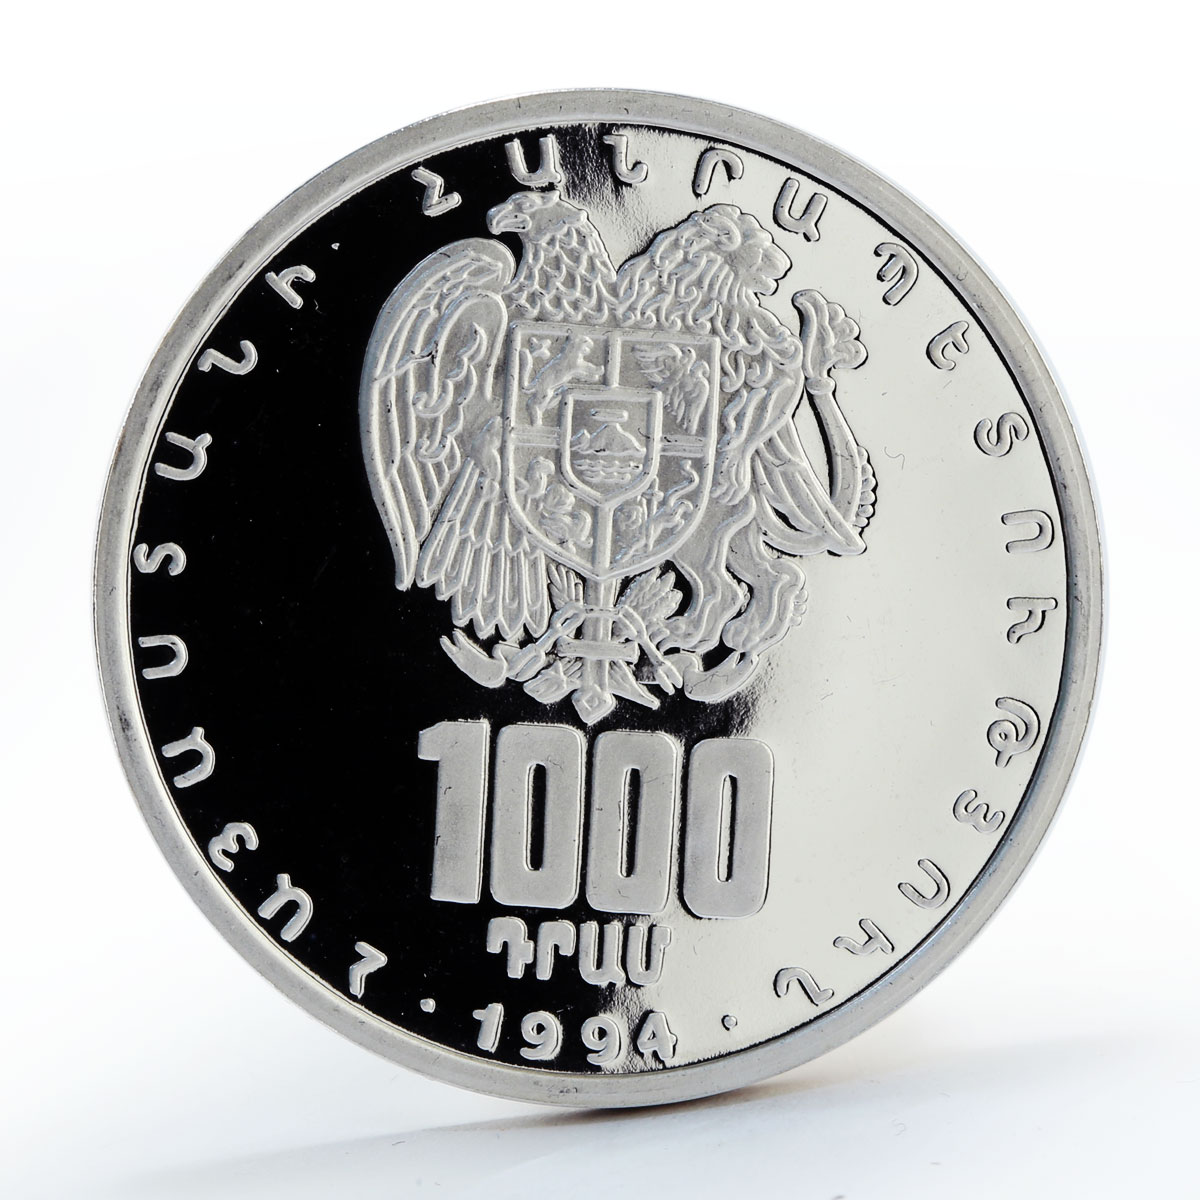 Armenia 1000 dram Armenian Currency proof silver coin 1994